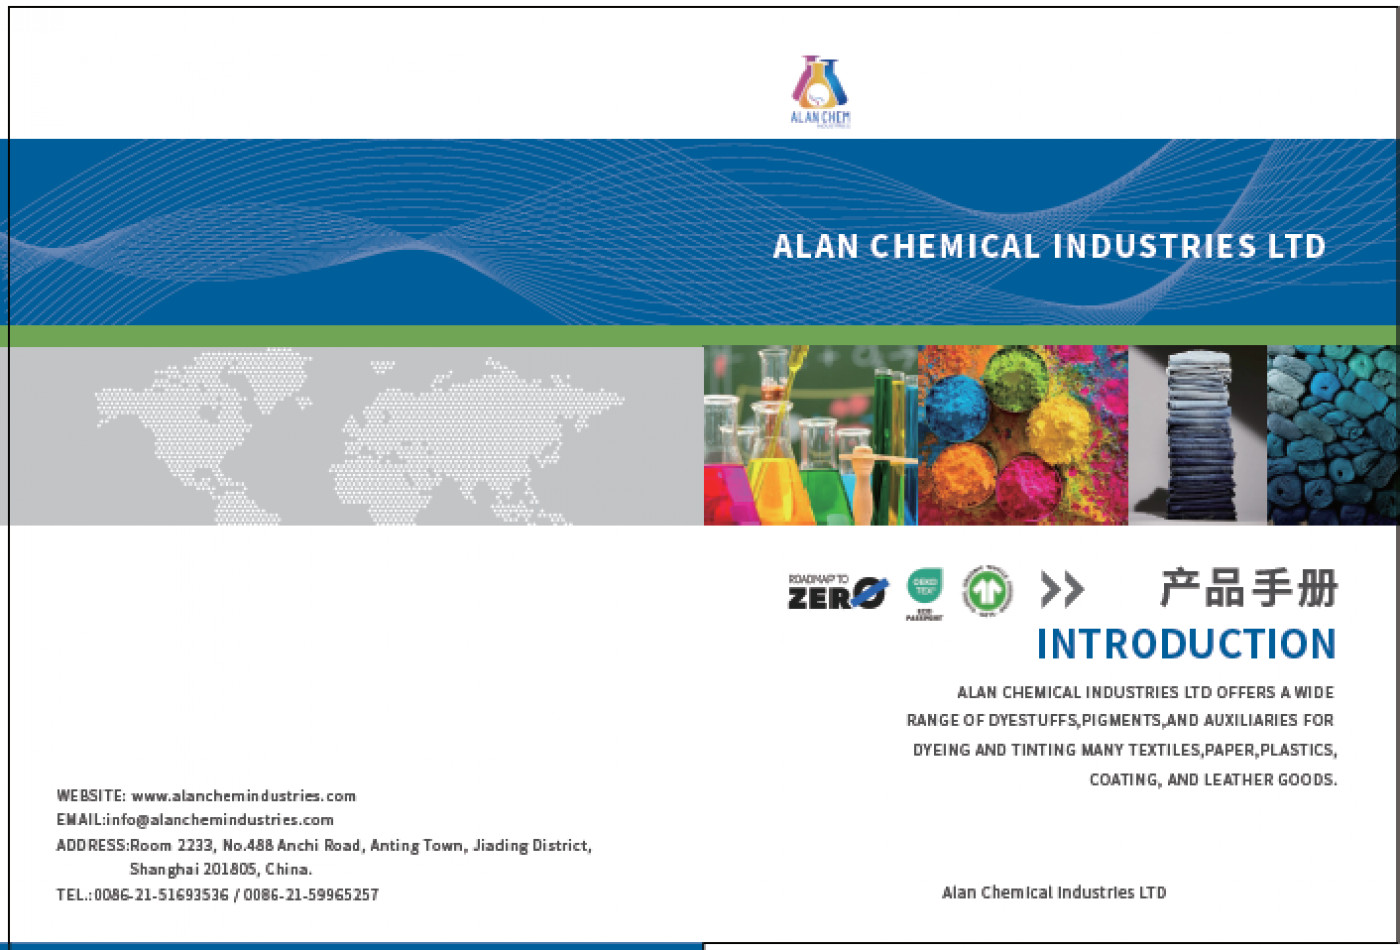 Alan Chemical Industries Ltd.